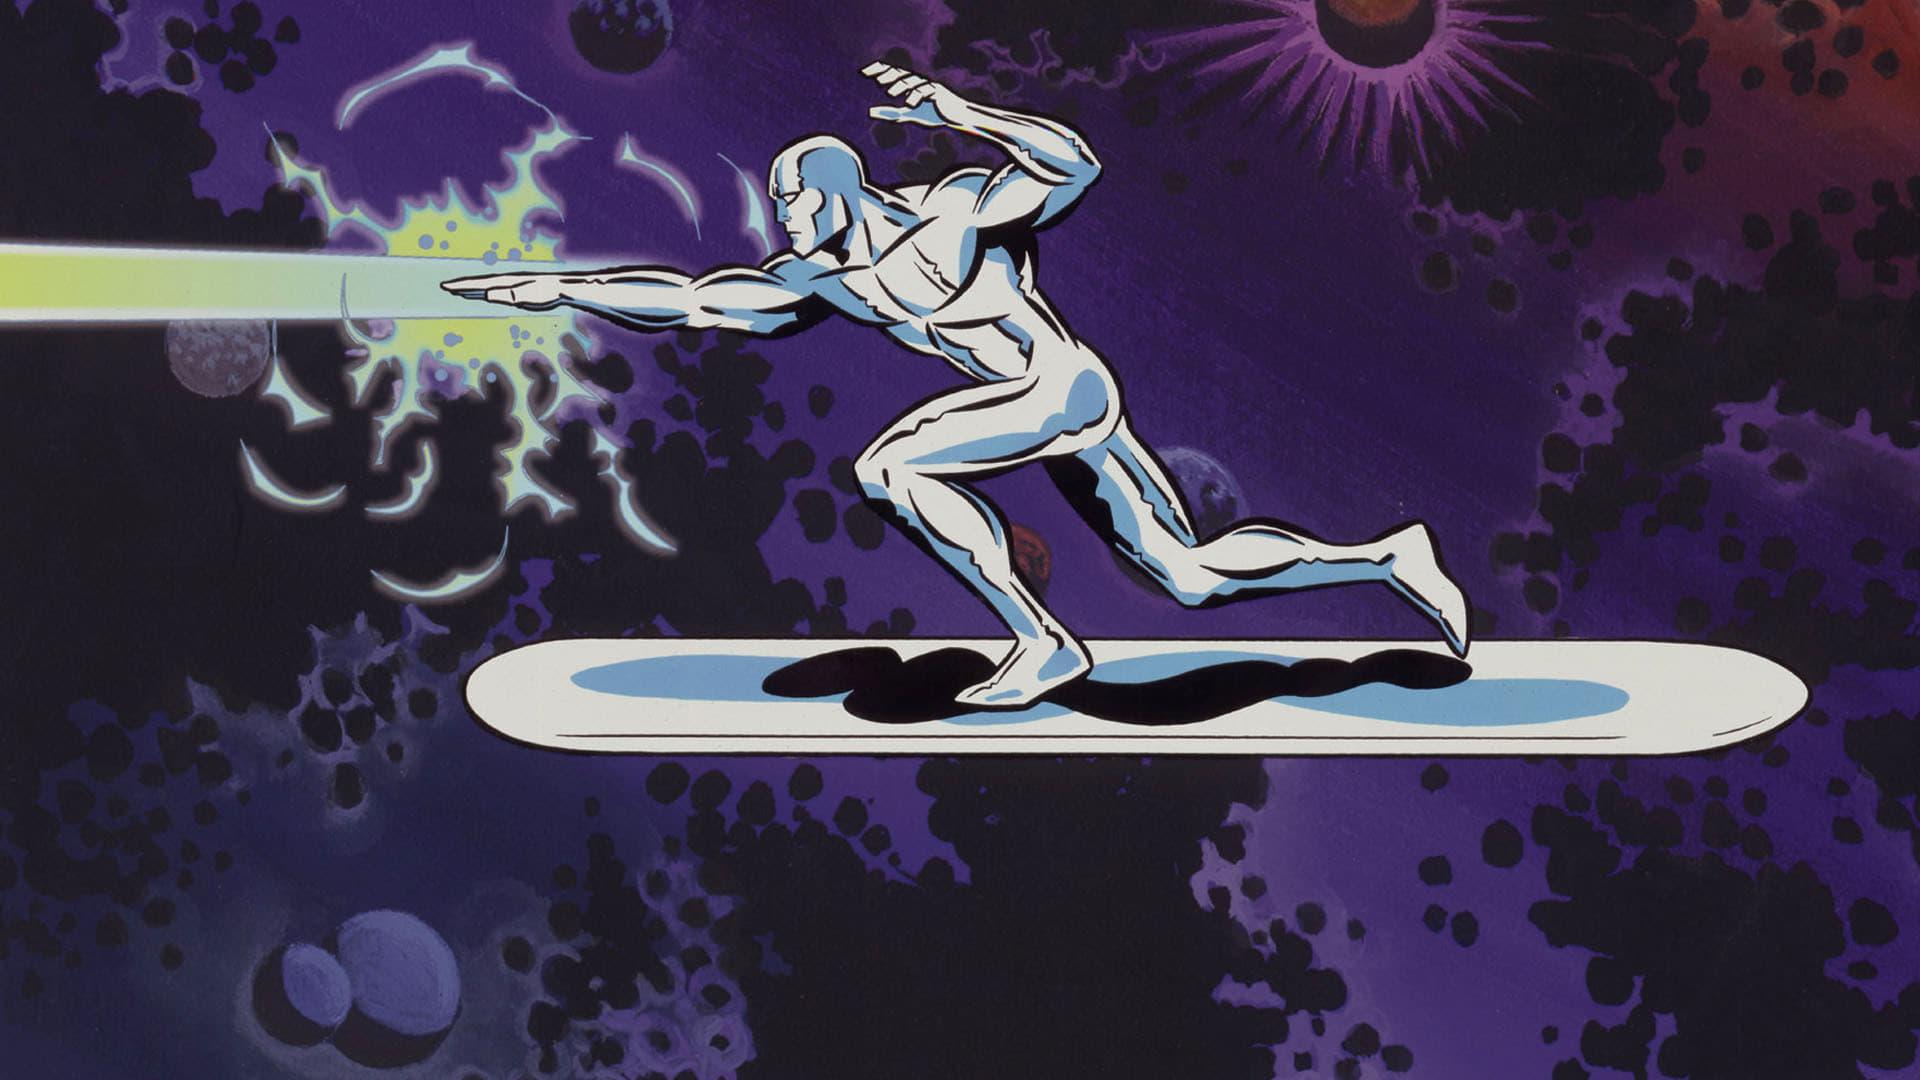 Silver Surfer backdrop